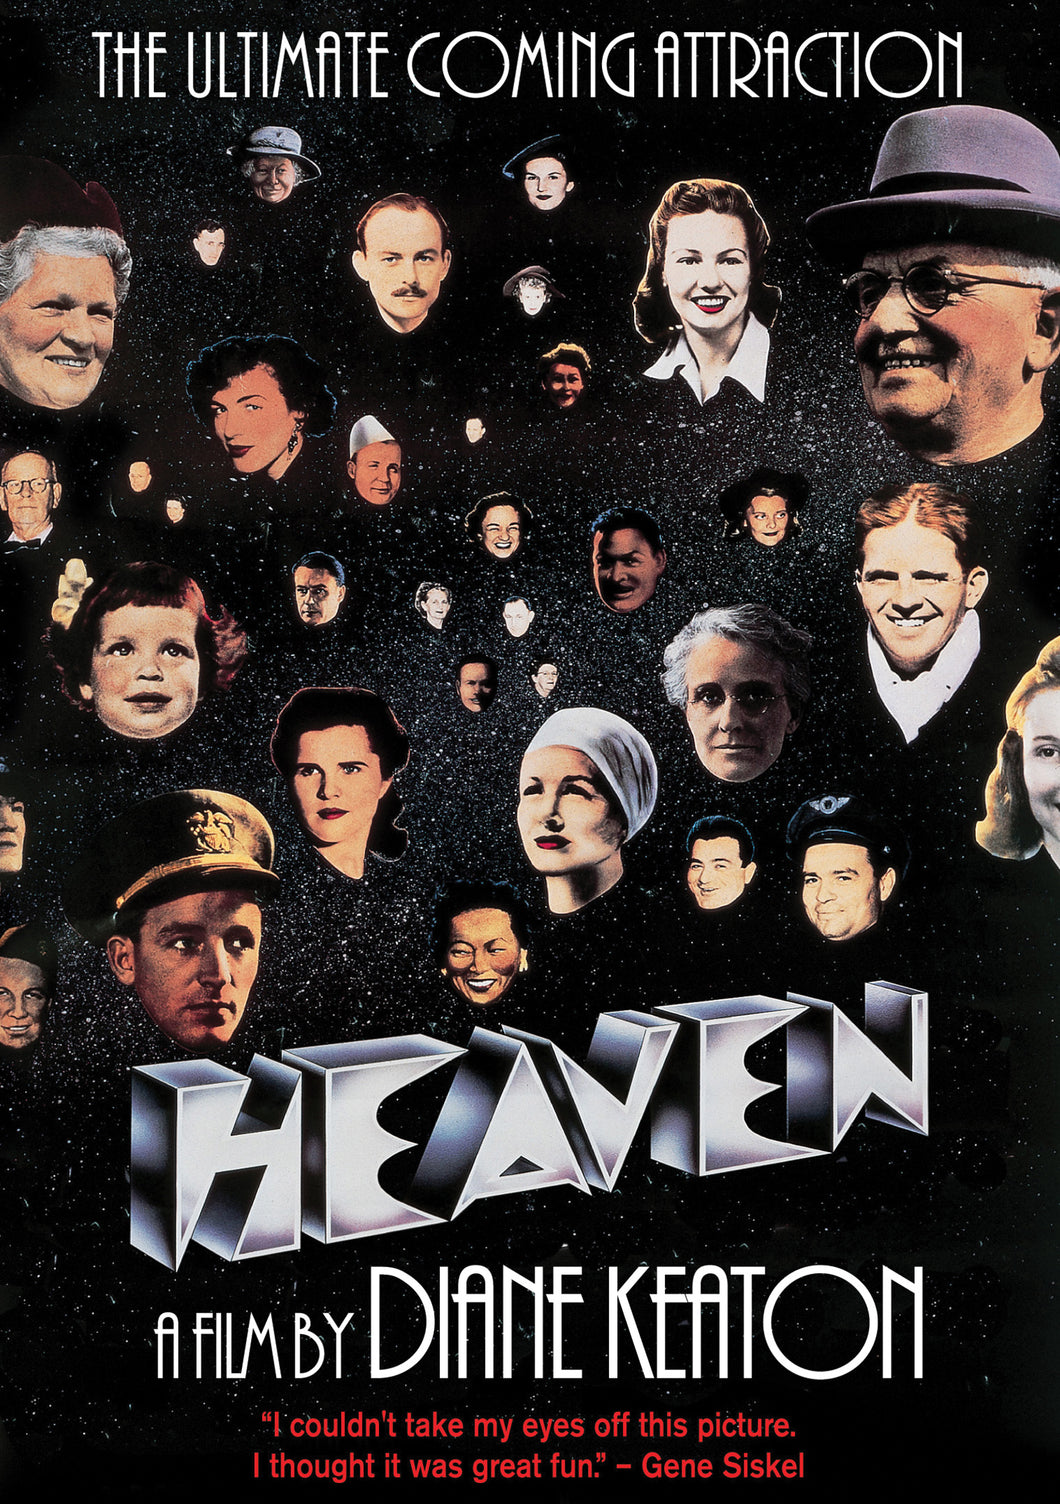 Heaven (DVD)